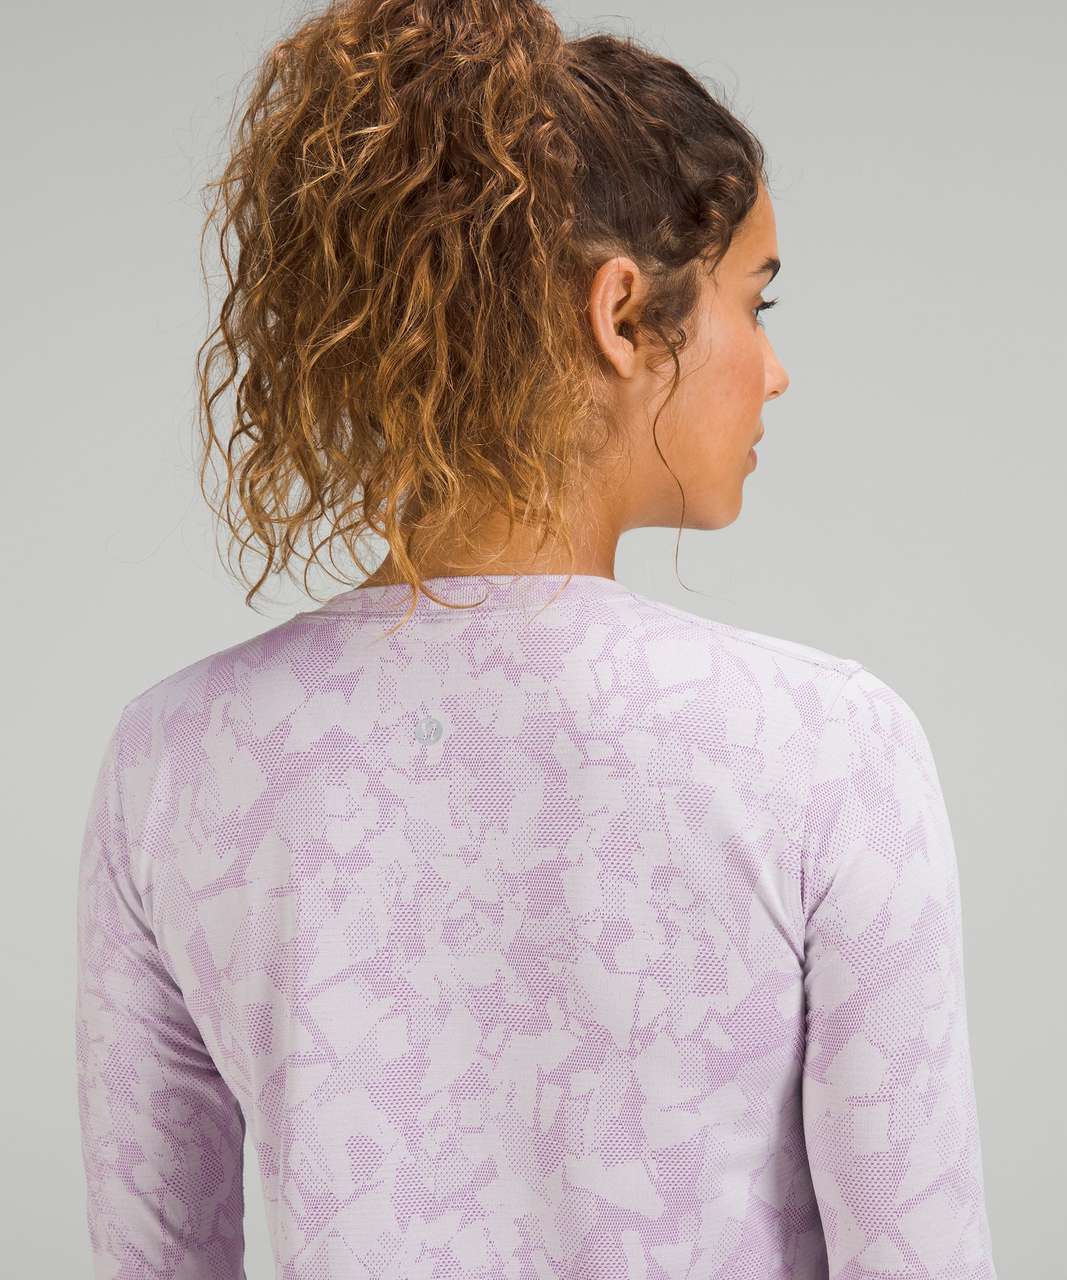 Lululemon Swiftly Relaxed Long Sleeve Shirt - Mosaic Multiply Moonlit Magenta / Faint Lavender